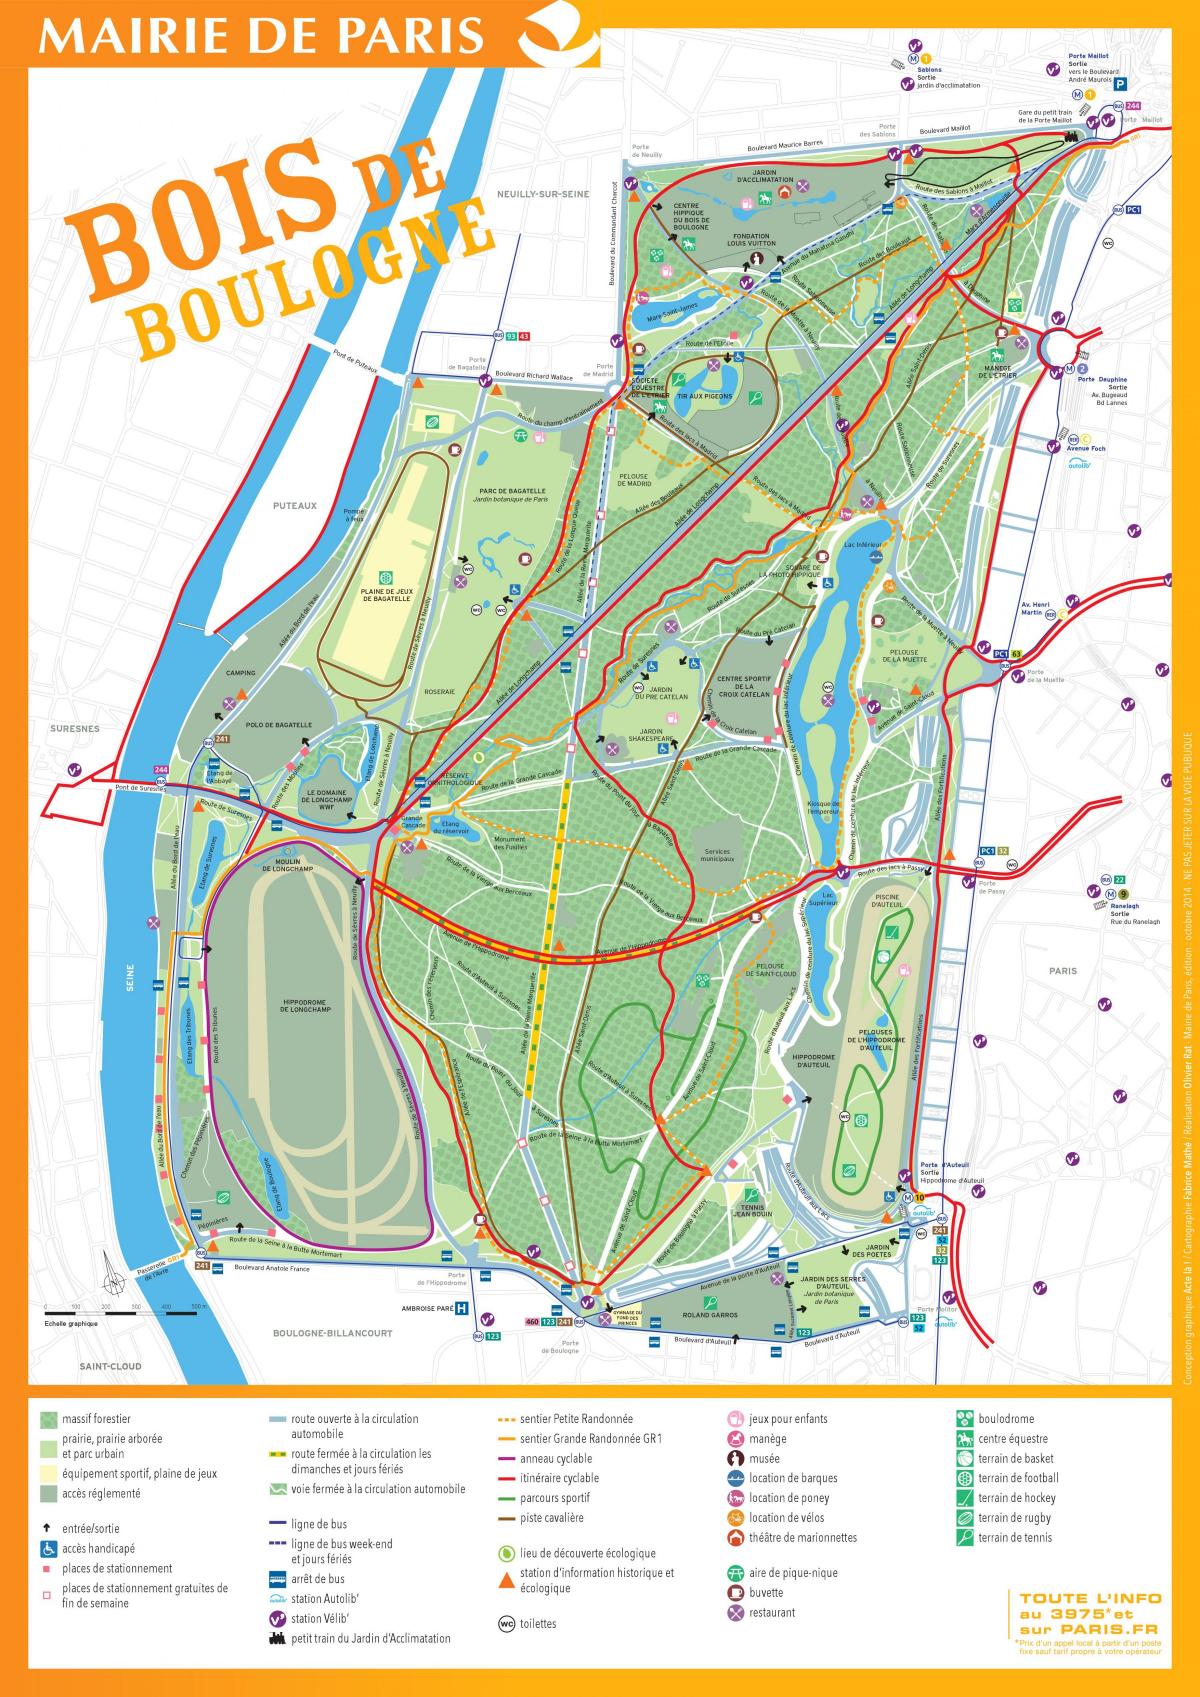 Քարտեզը Буа-դե-Boulogne